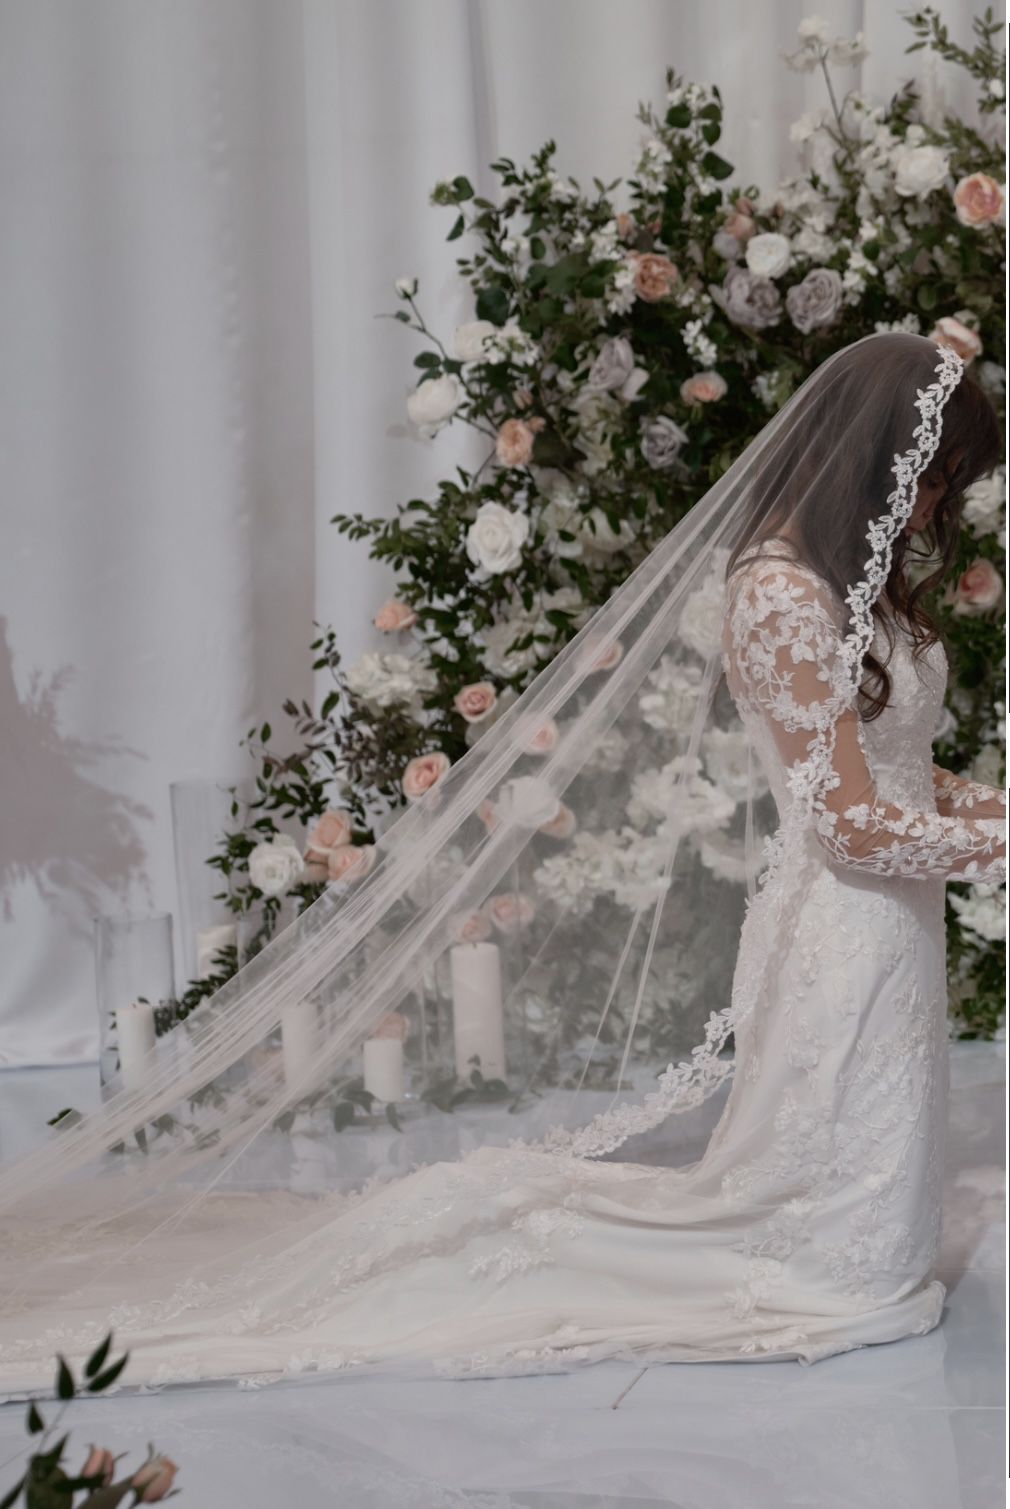 Lace Mantilla wedding veil